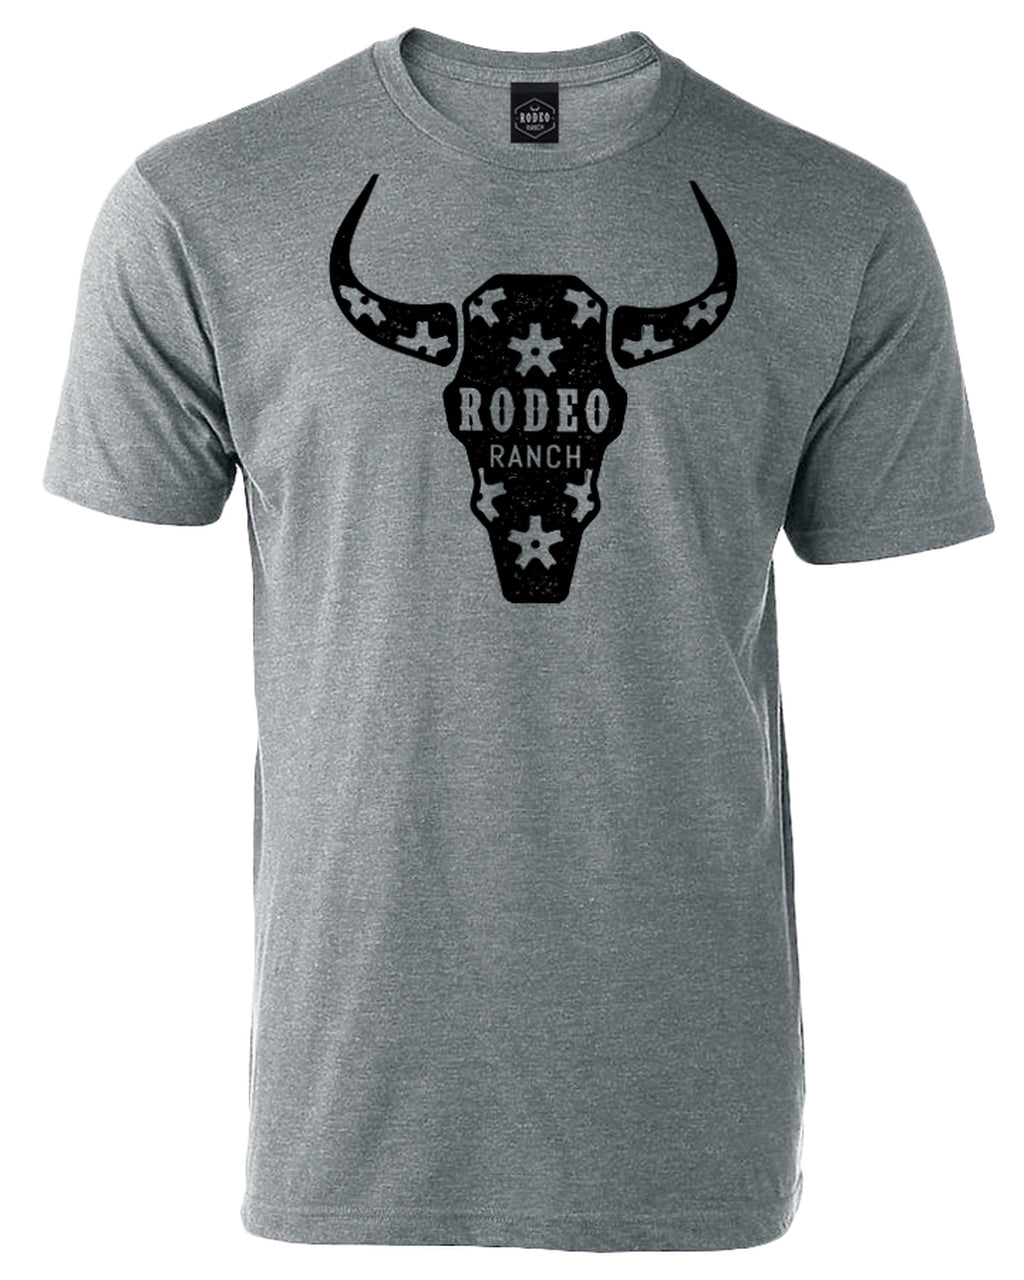 Rodeo Ranch Skull Spur Short Sleeve Shirt - Heather Grey